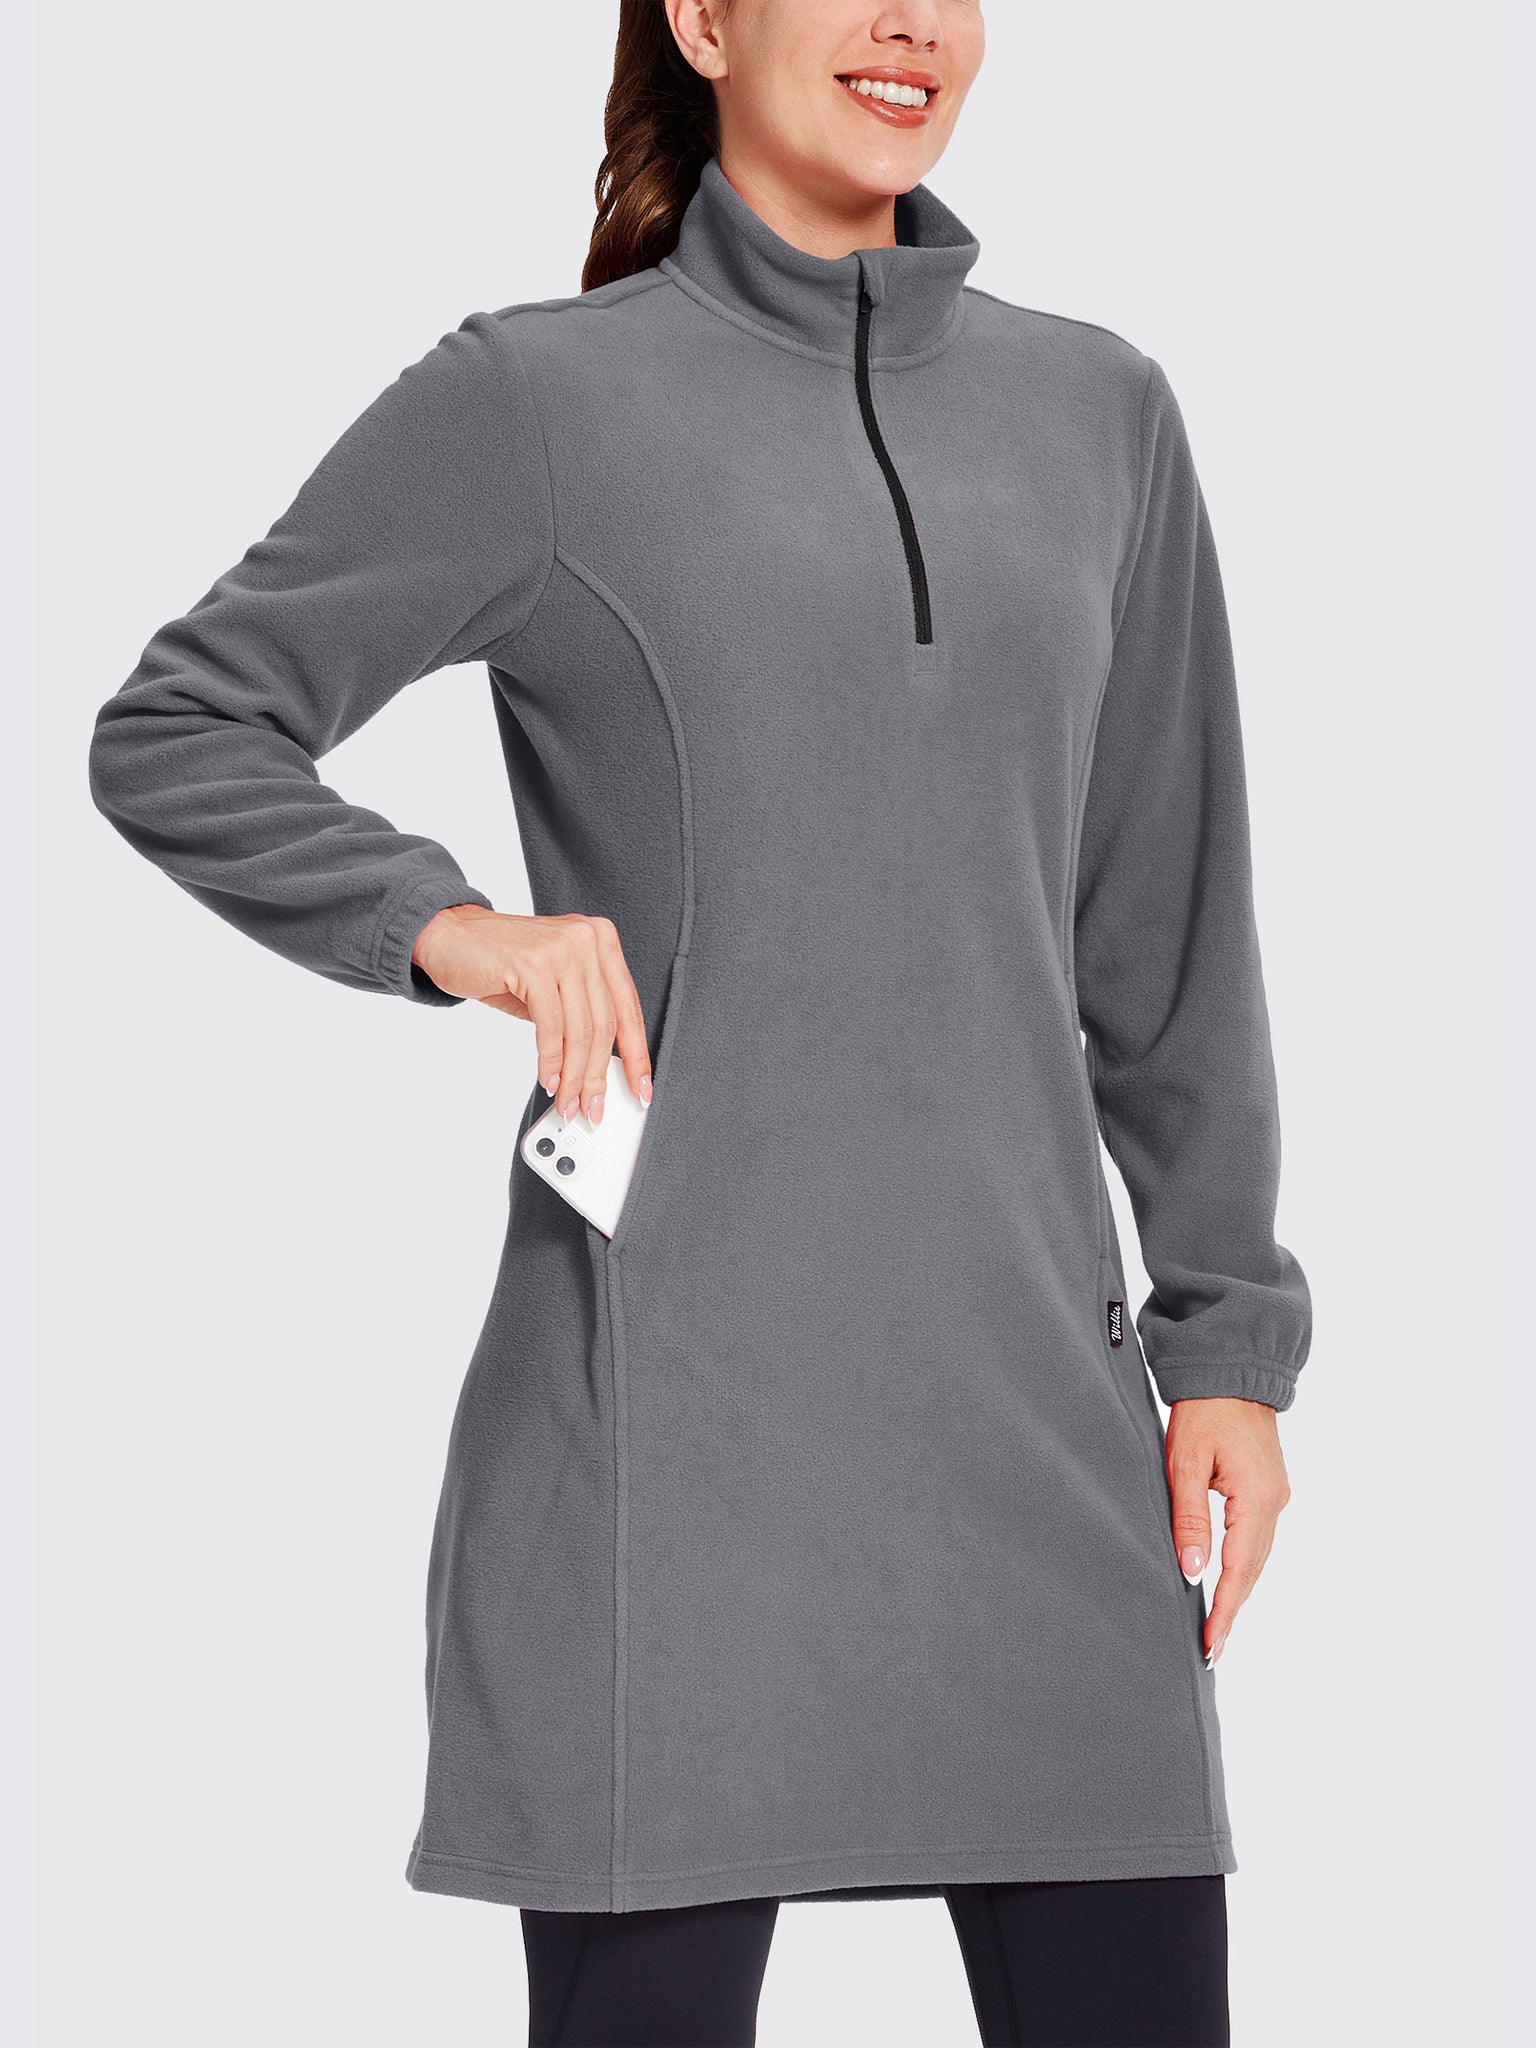 Women's Fleece Long-Sleeve Turtleneck Dress DeepGray2